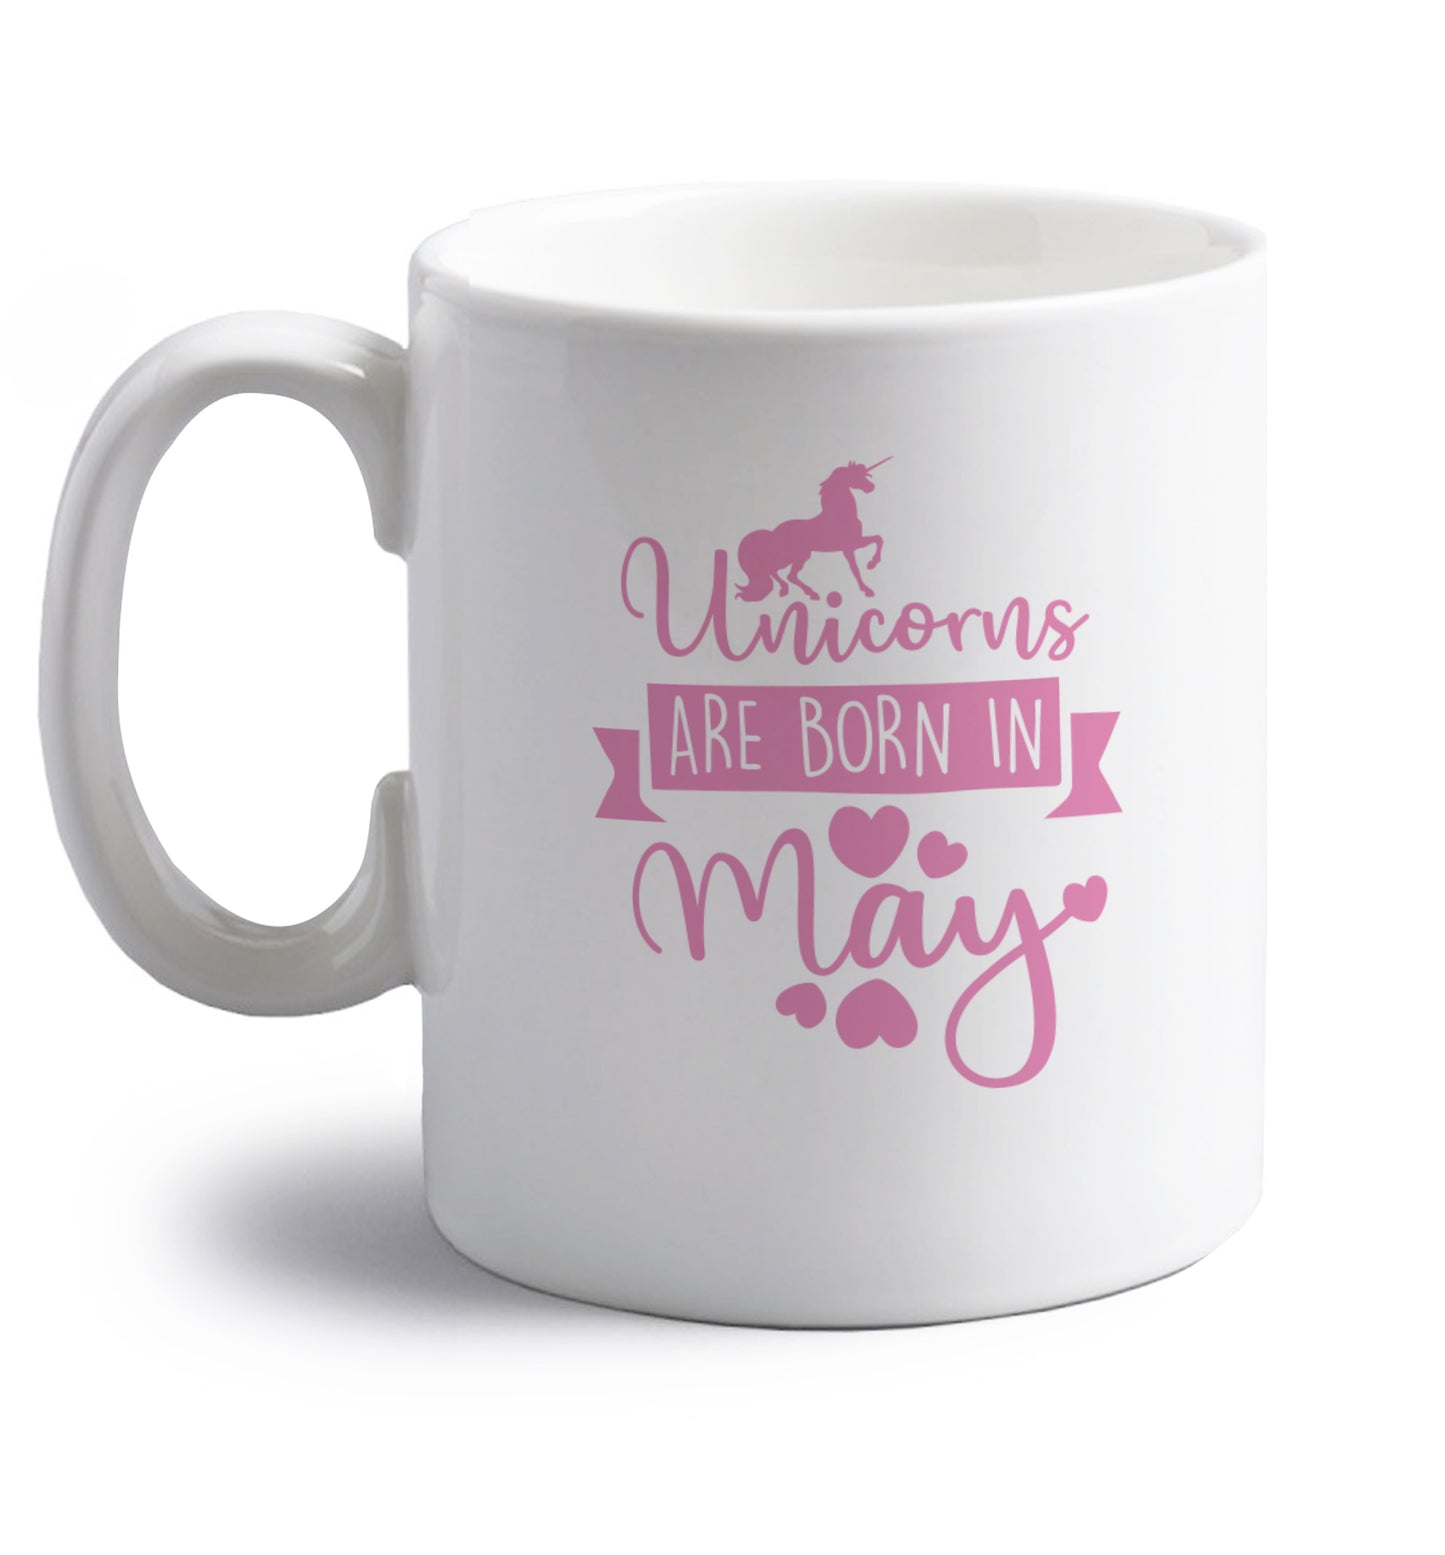 Unicorns are born in May right handed white ceramic mug 